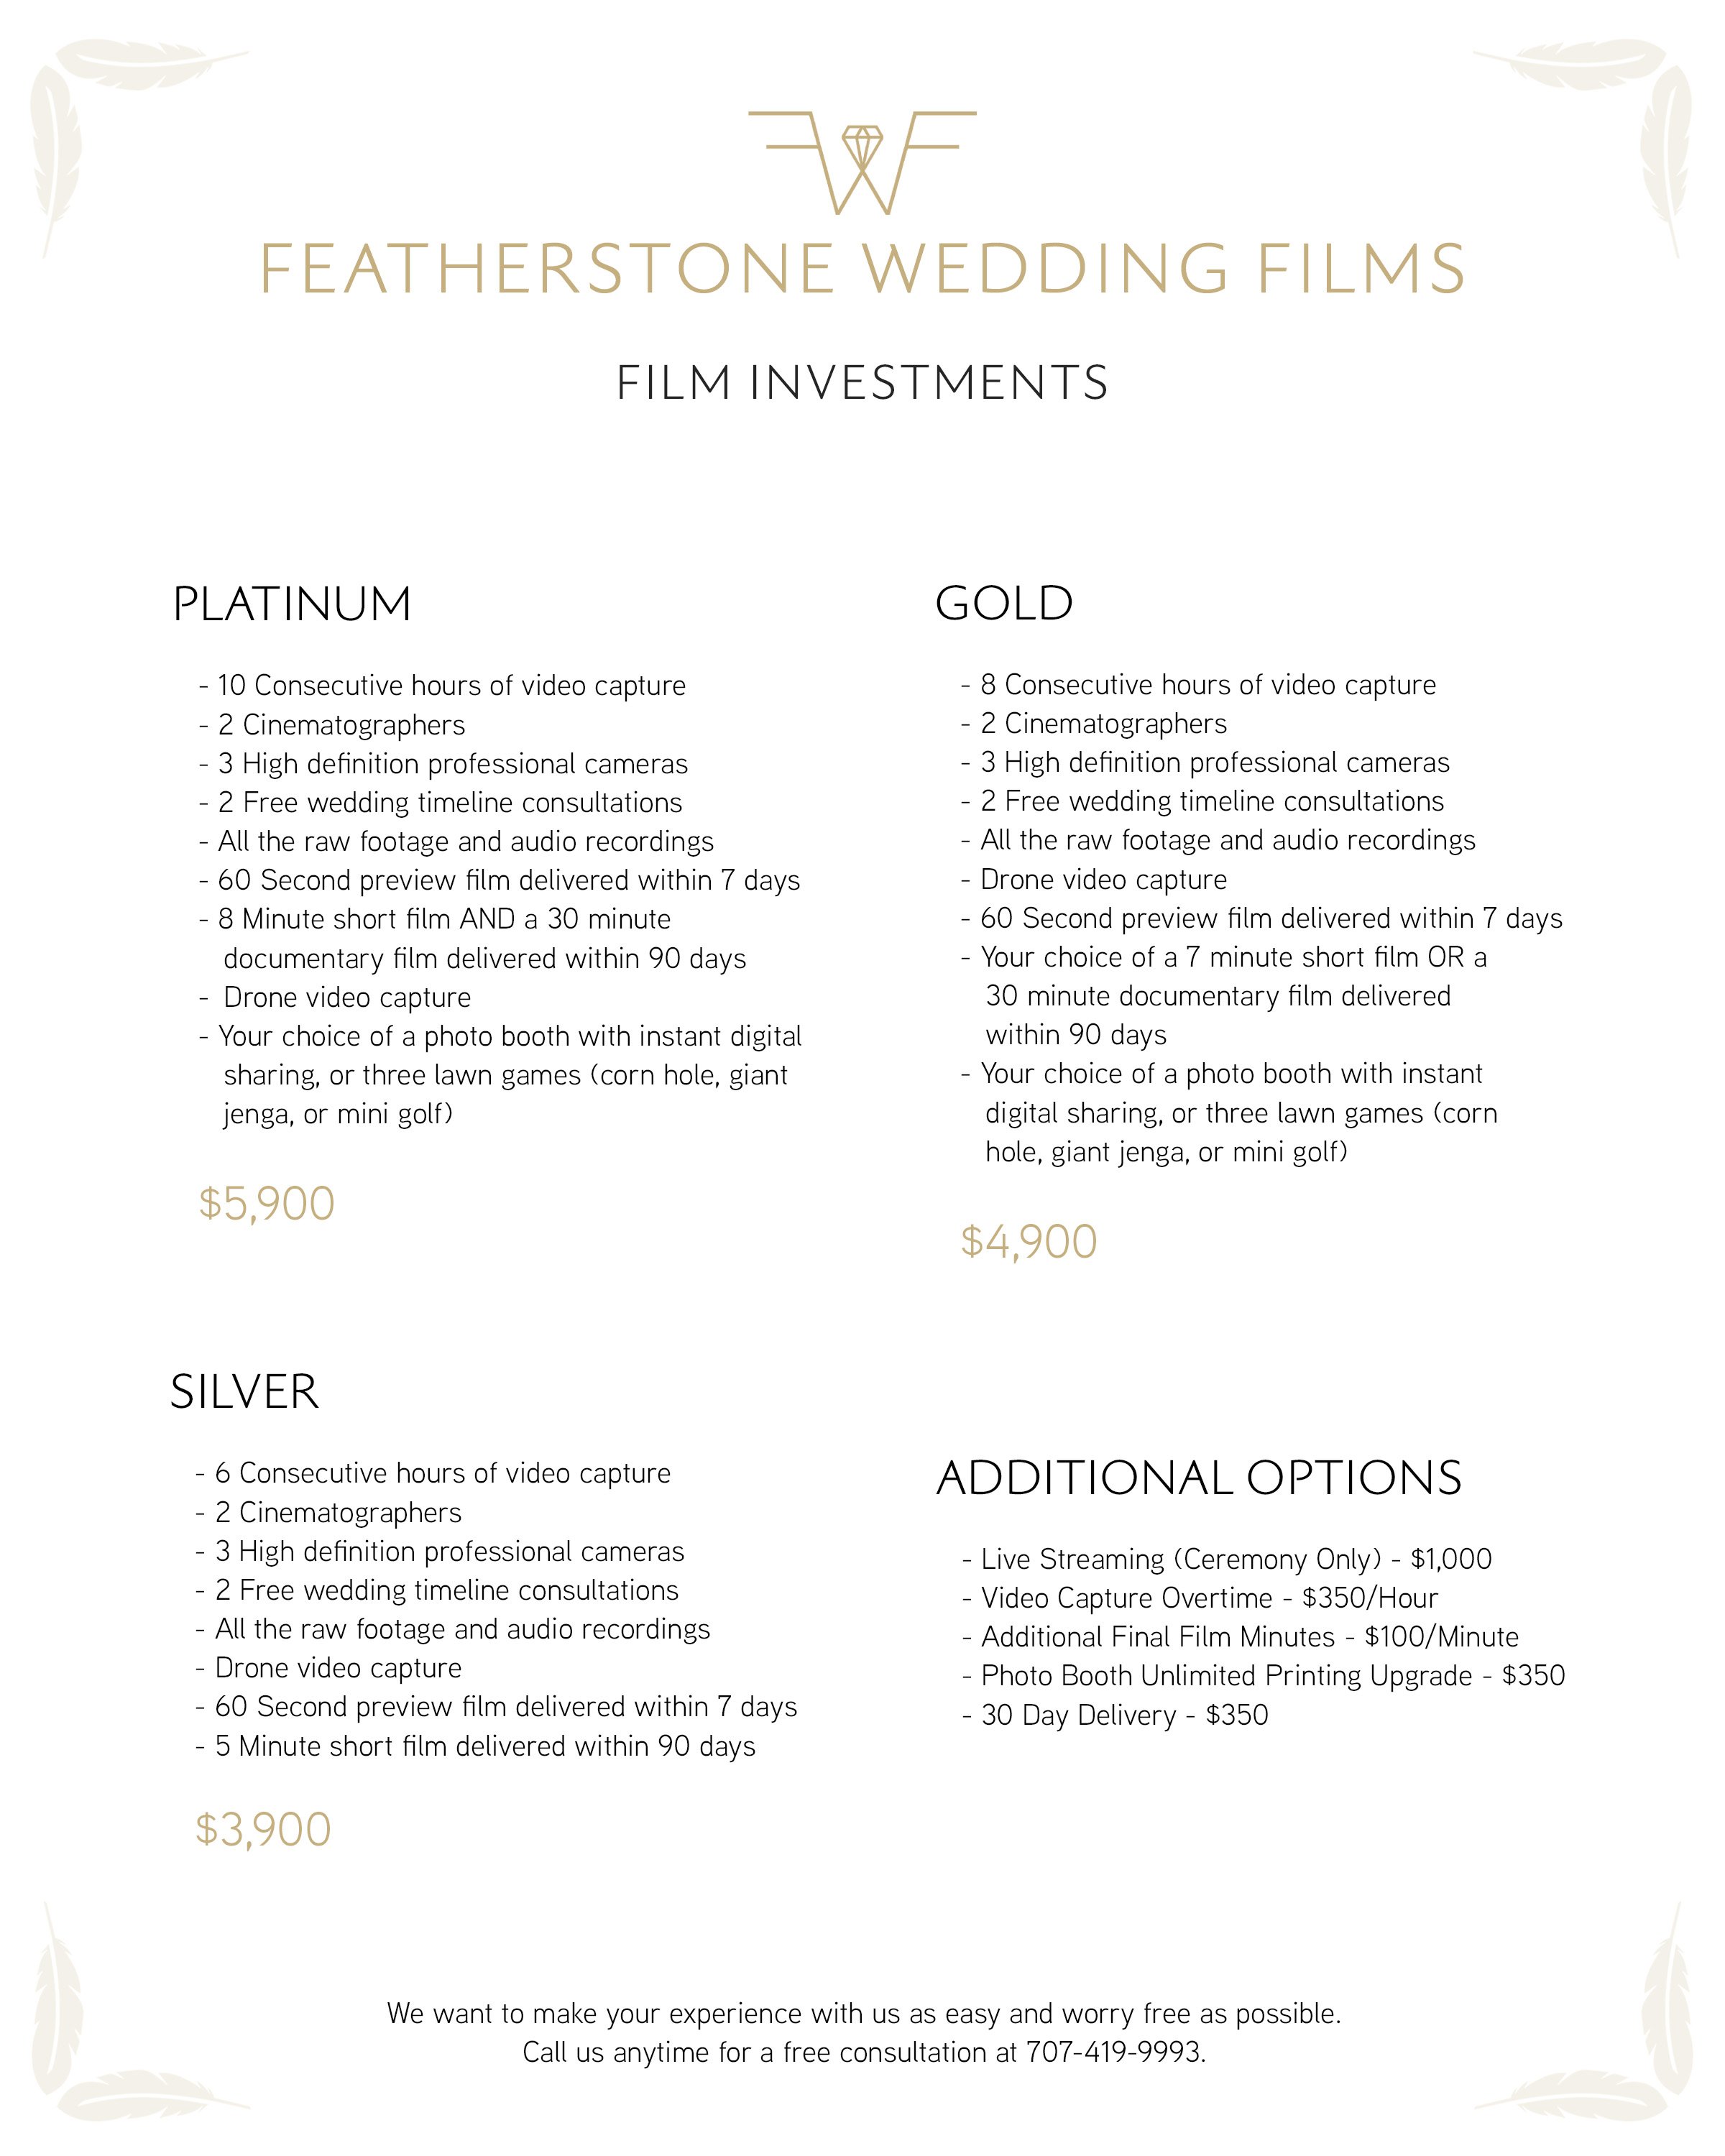 Featherstone Wedding Films - Video Price Guide.jpg